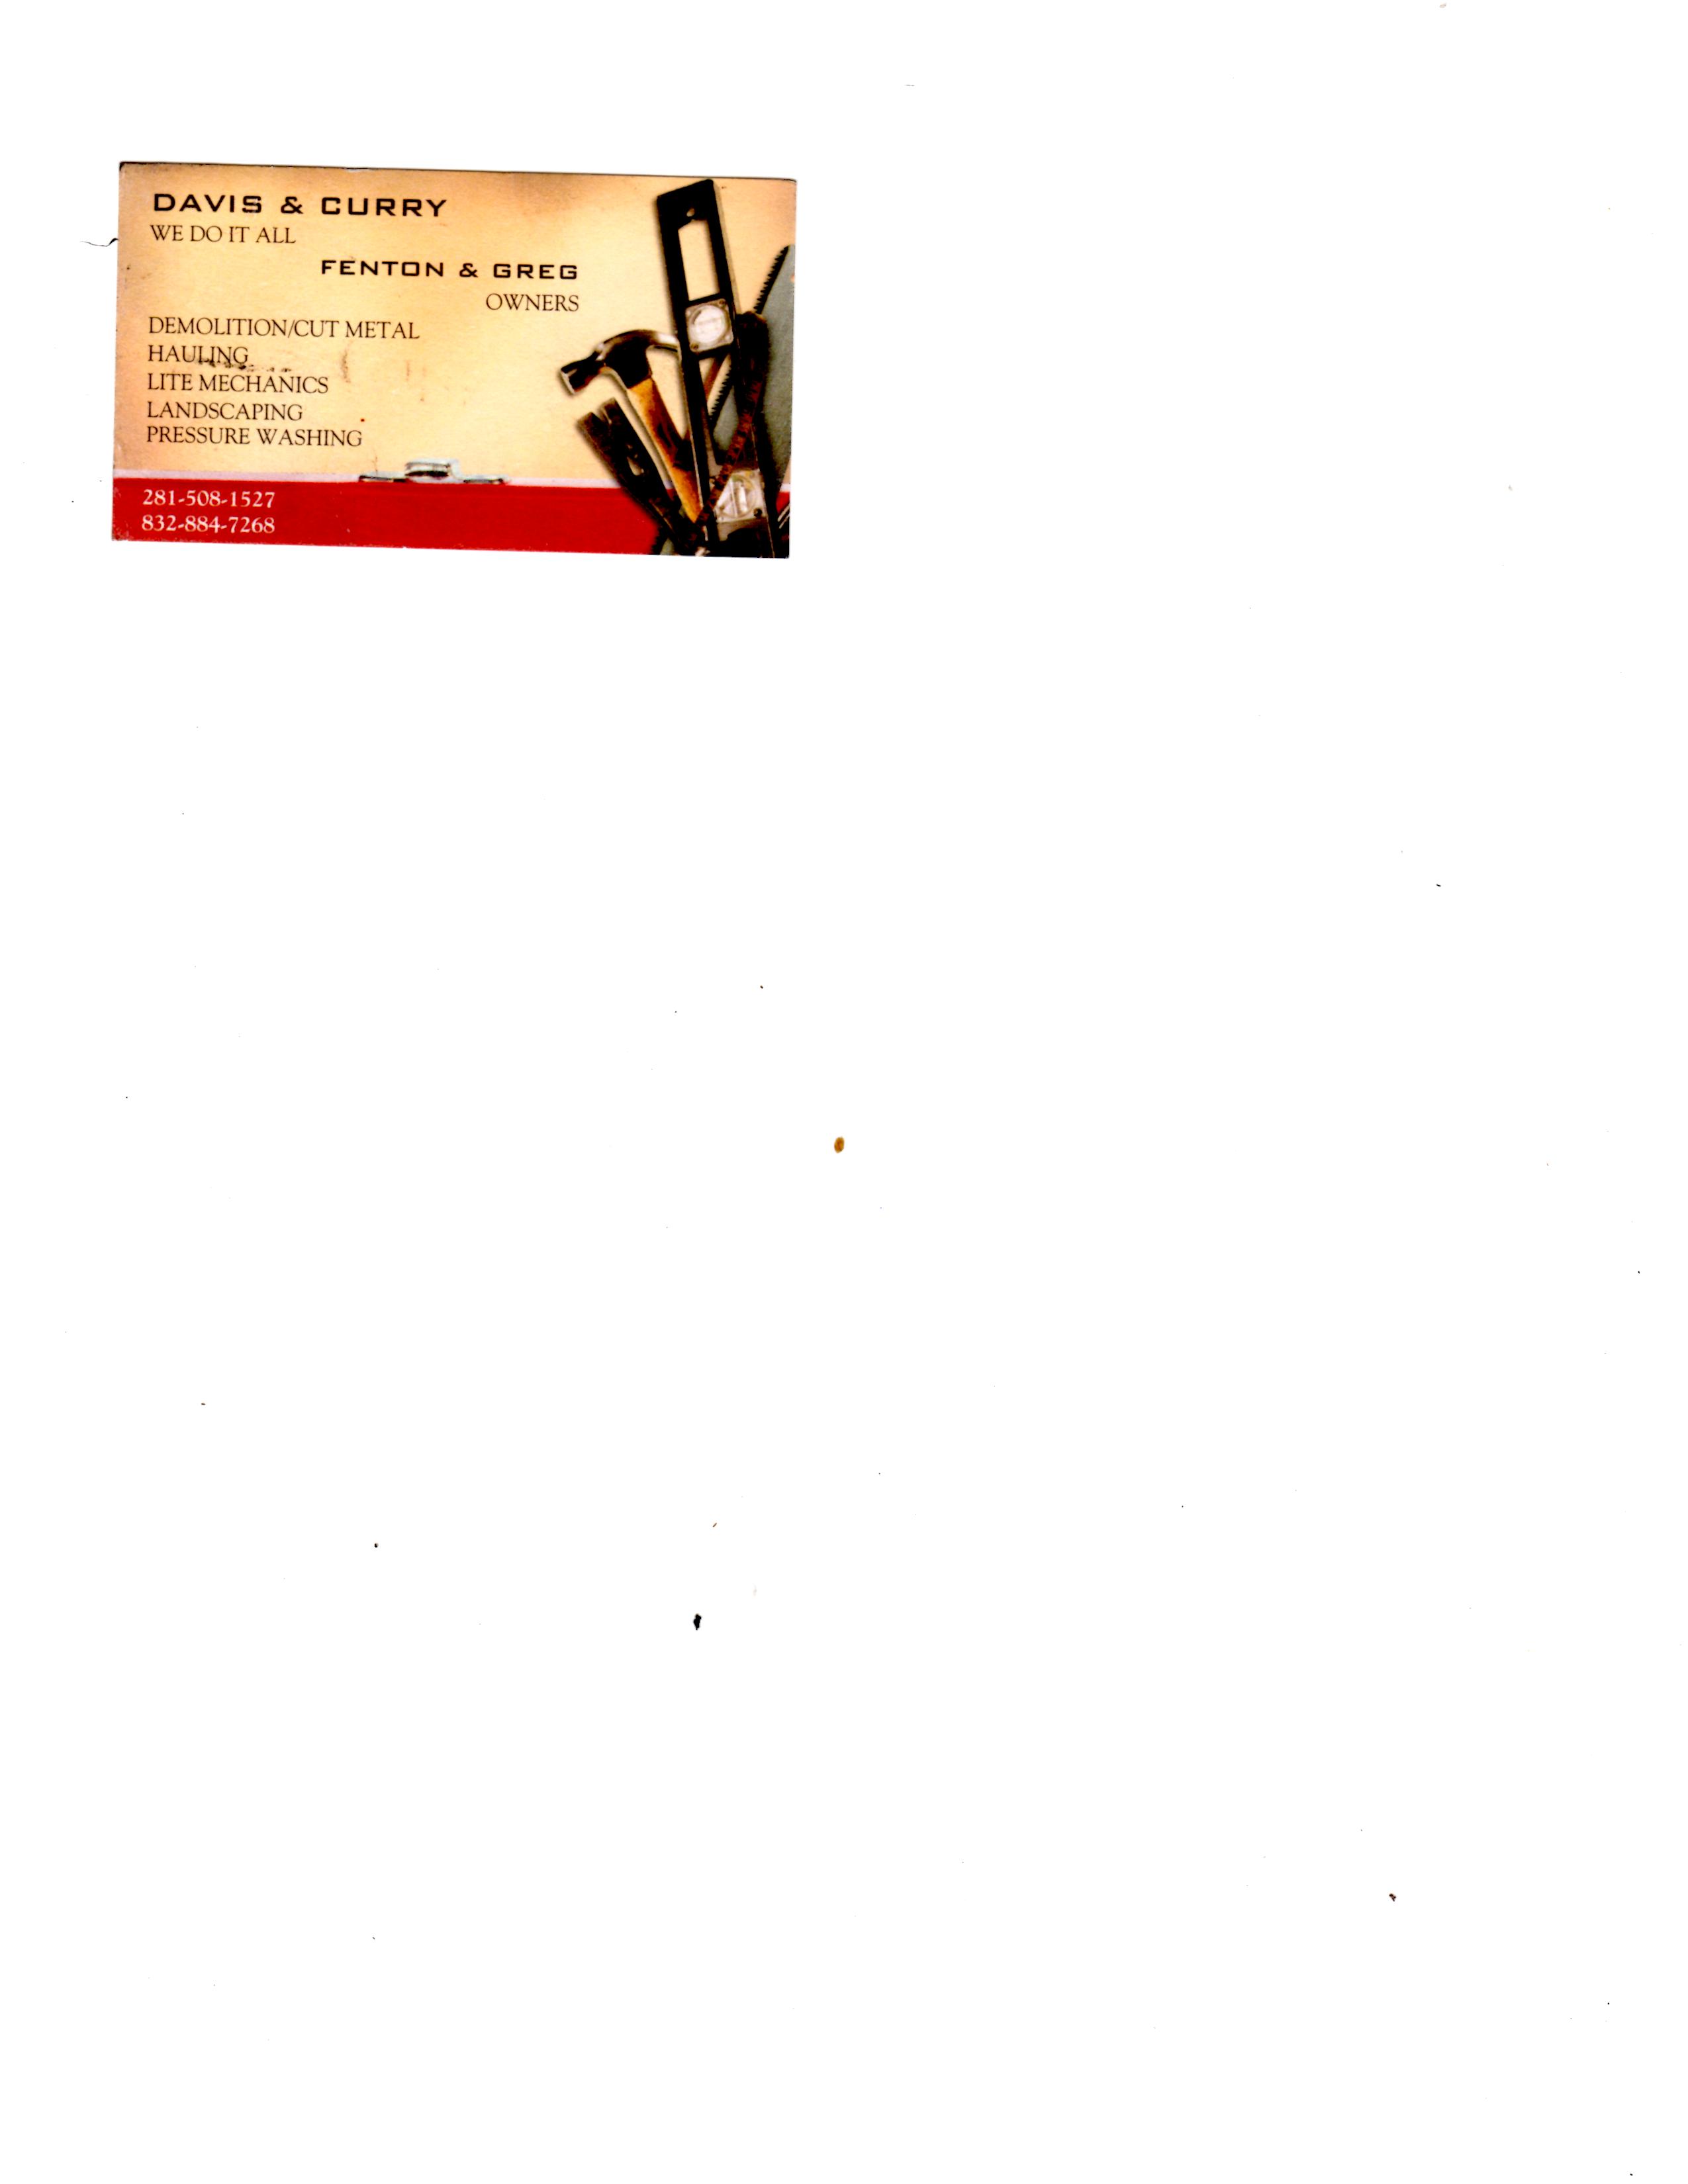 Fenton Davis Business Card